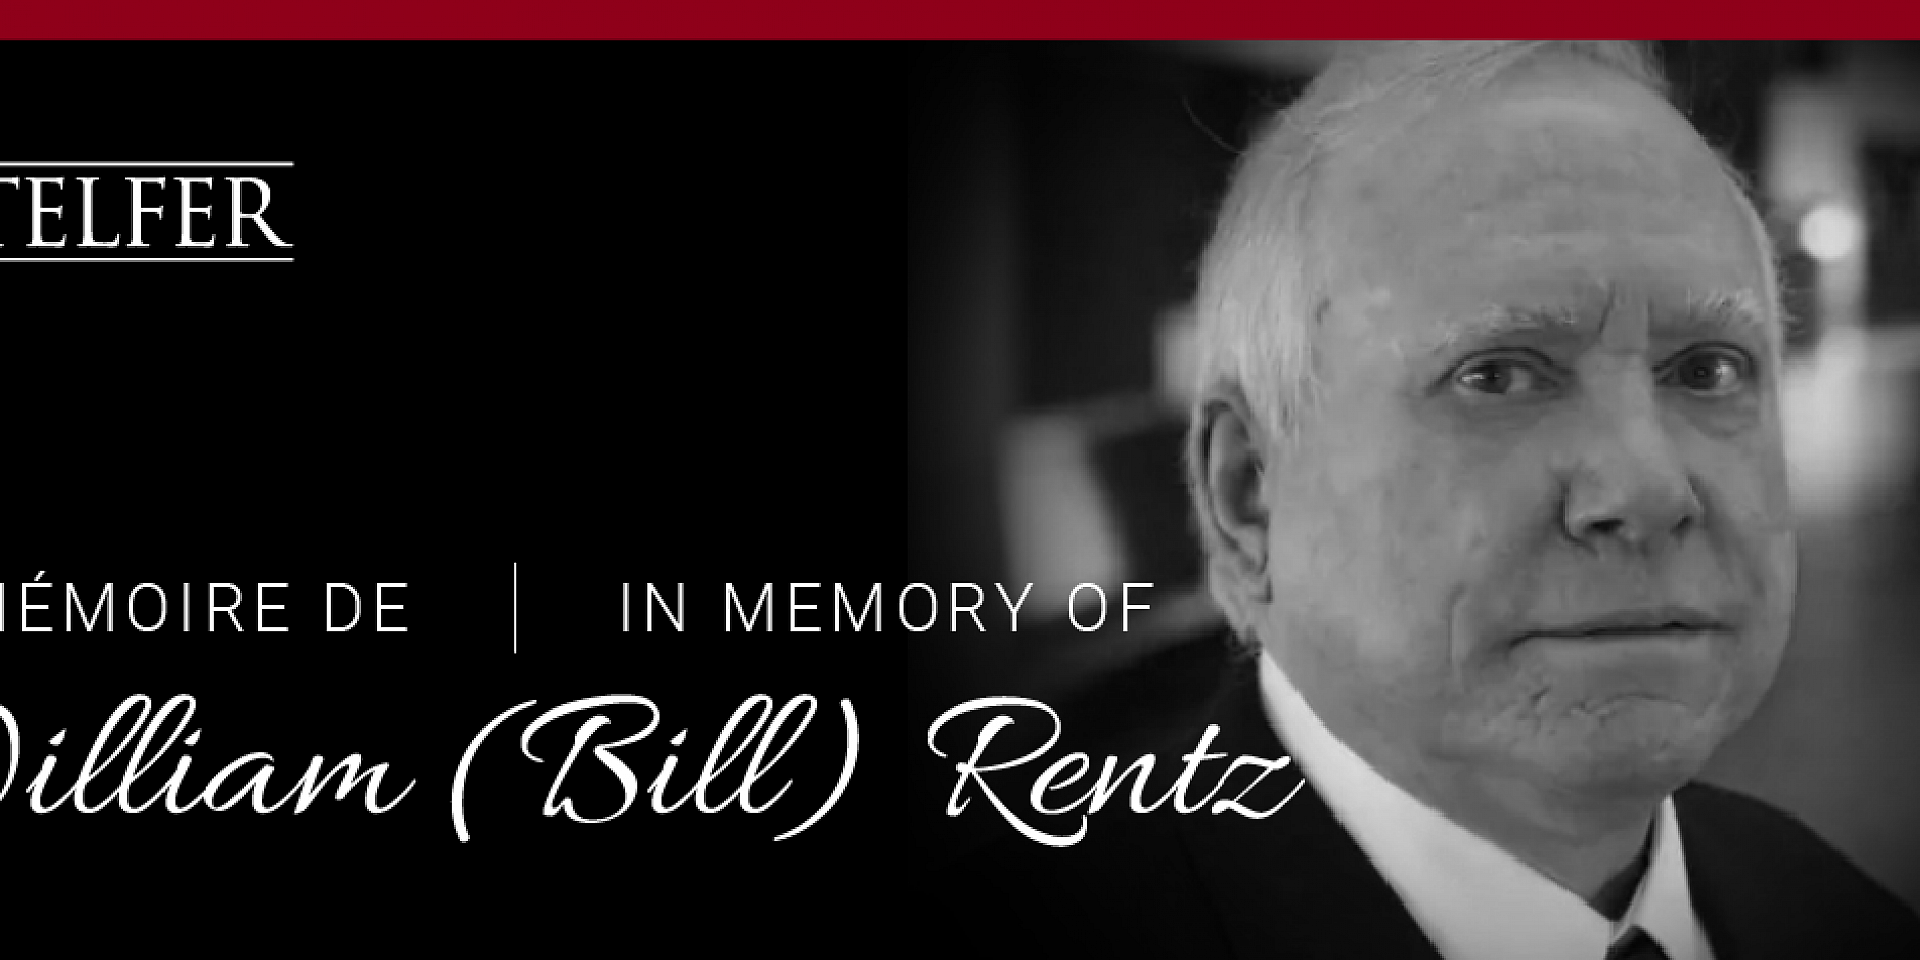 University of Ottawa mourns the loss of Professor William Rentz